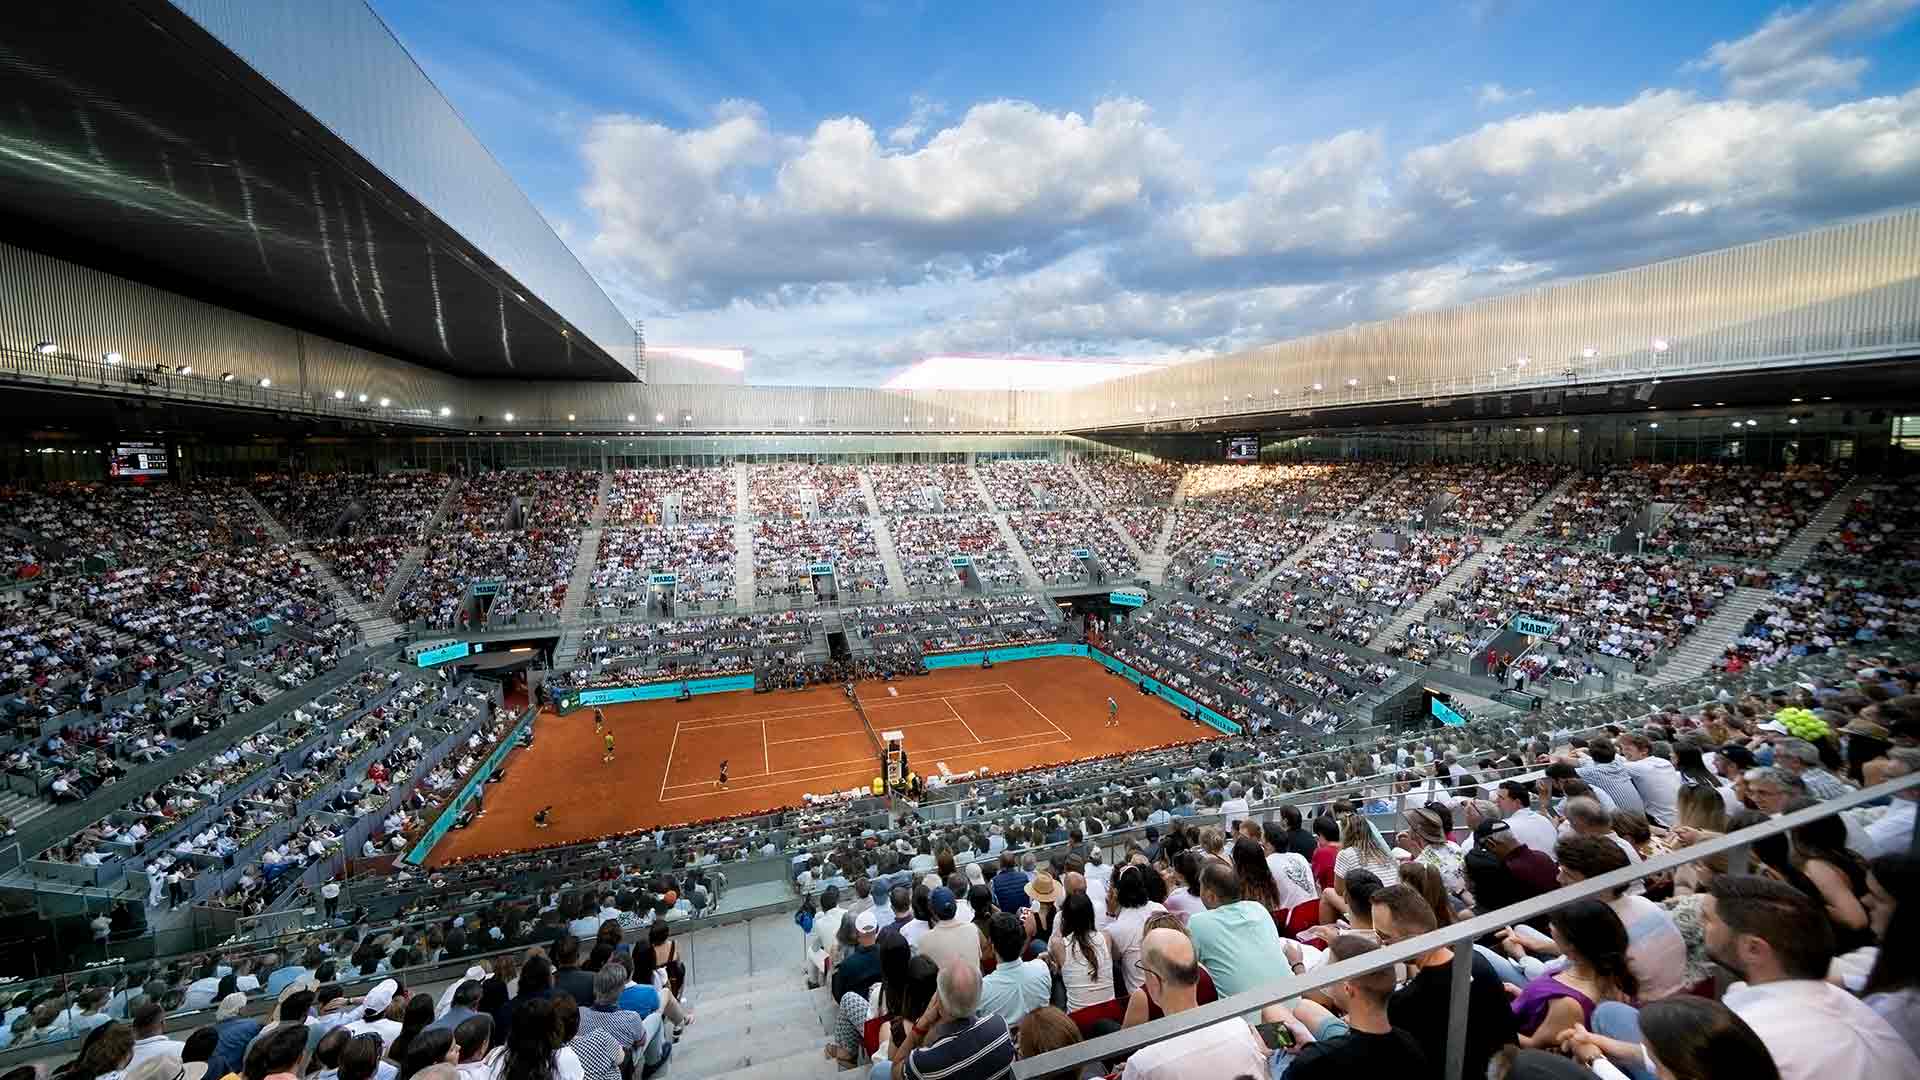 El Mutua Madrid Open se disputa en la Caja Mágica desde 2009.